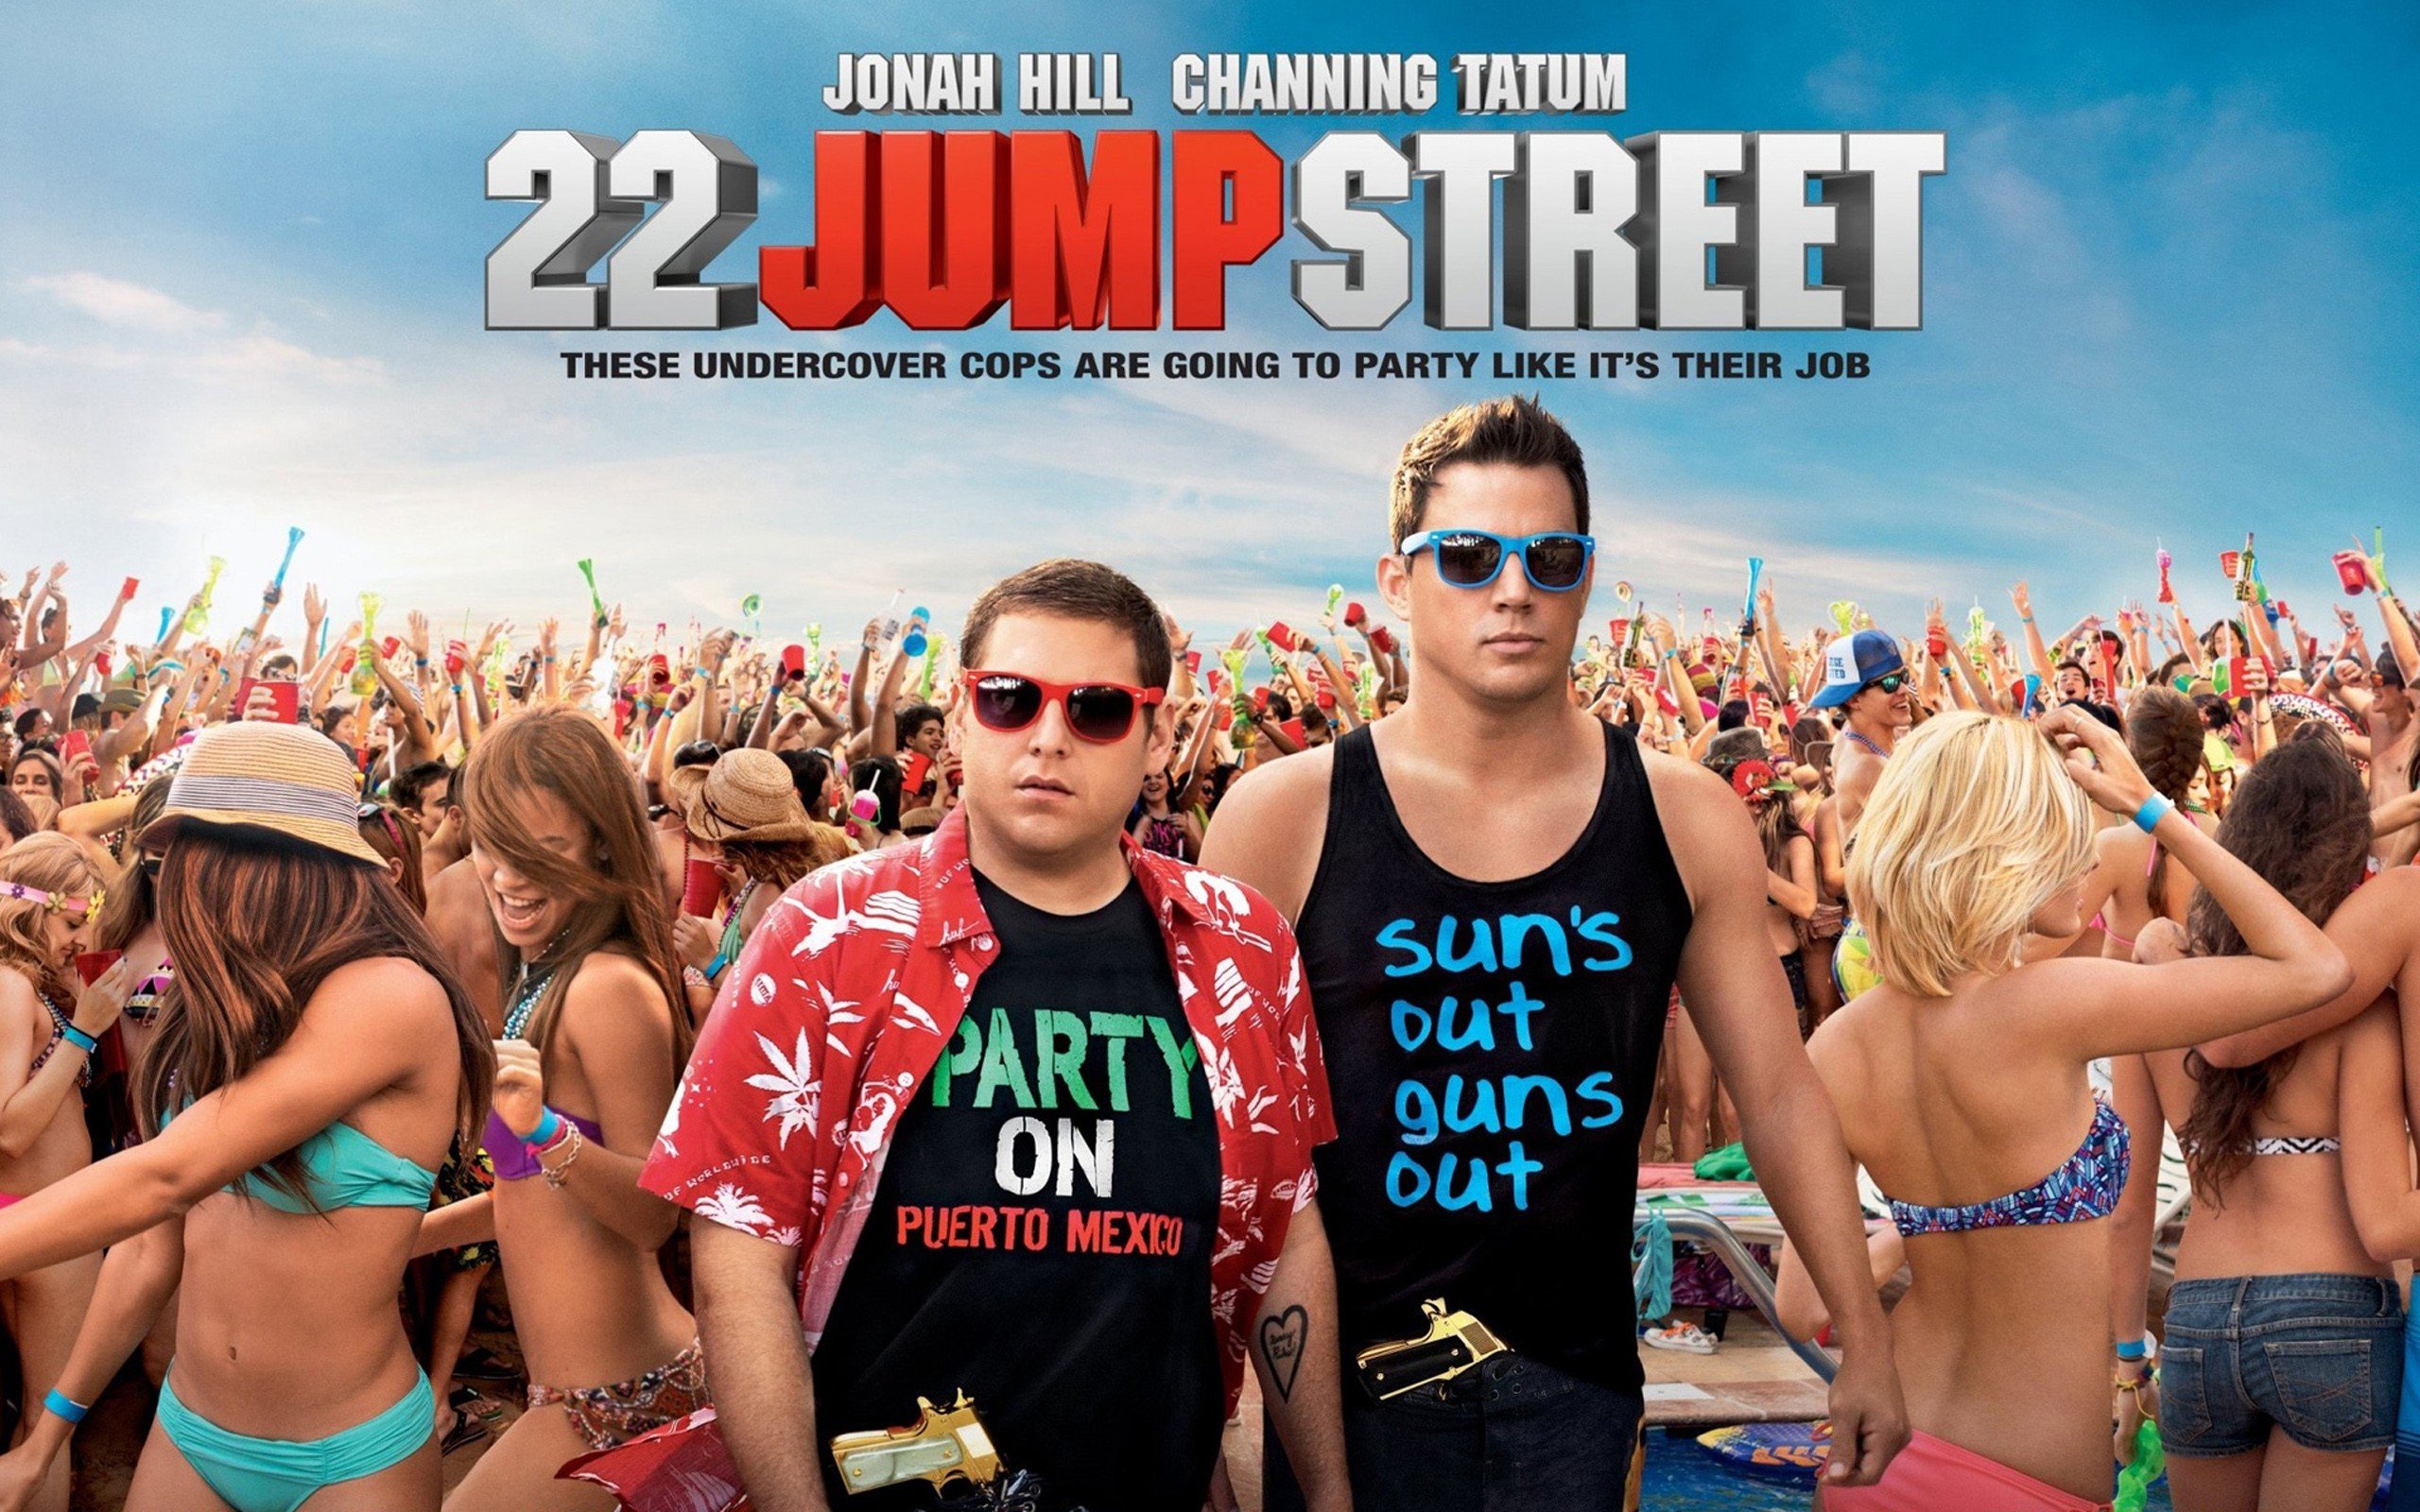 22 jump street, Action, Comedy, Crime, Jump, Street Wallpaper